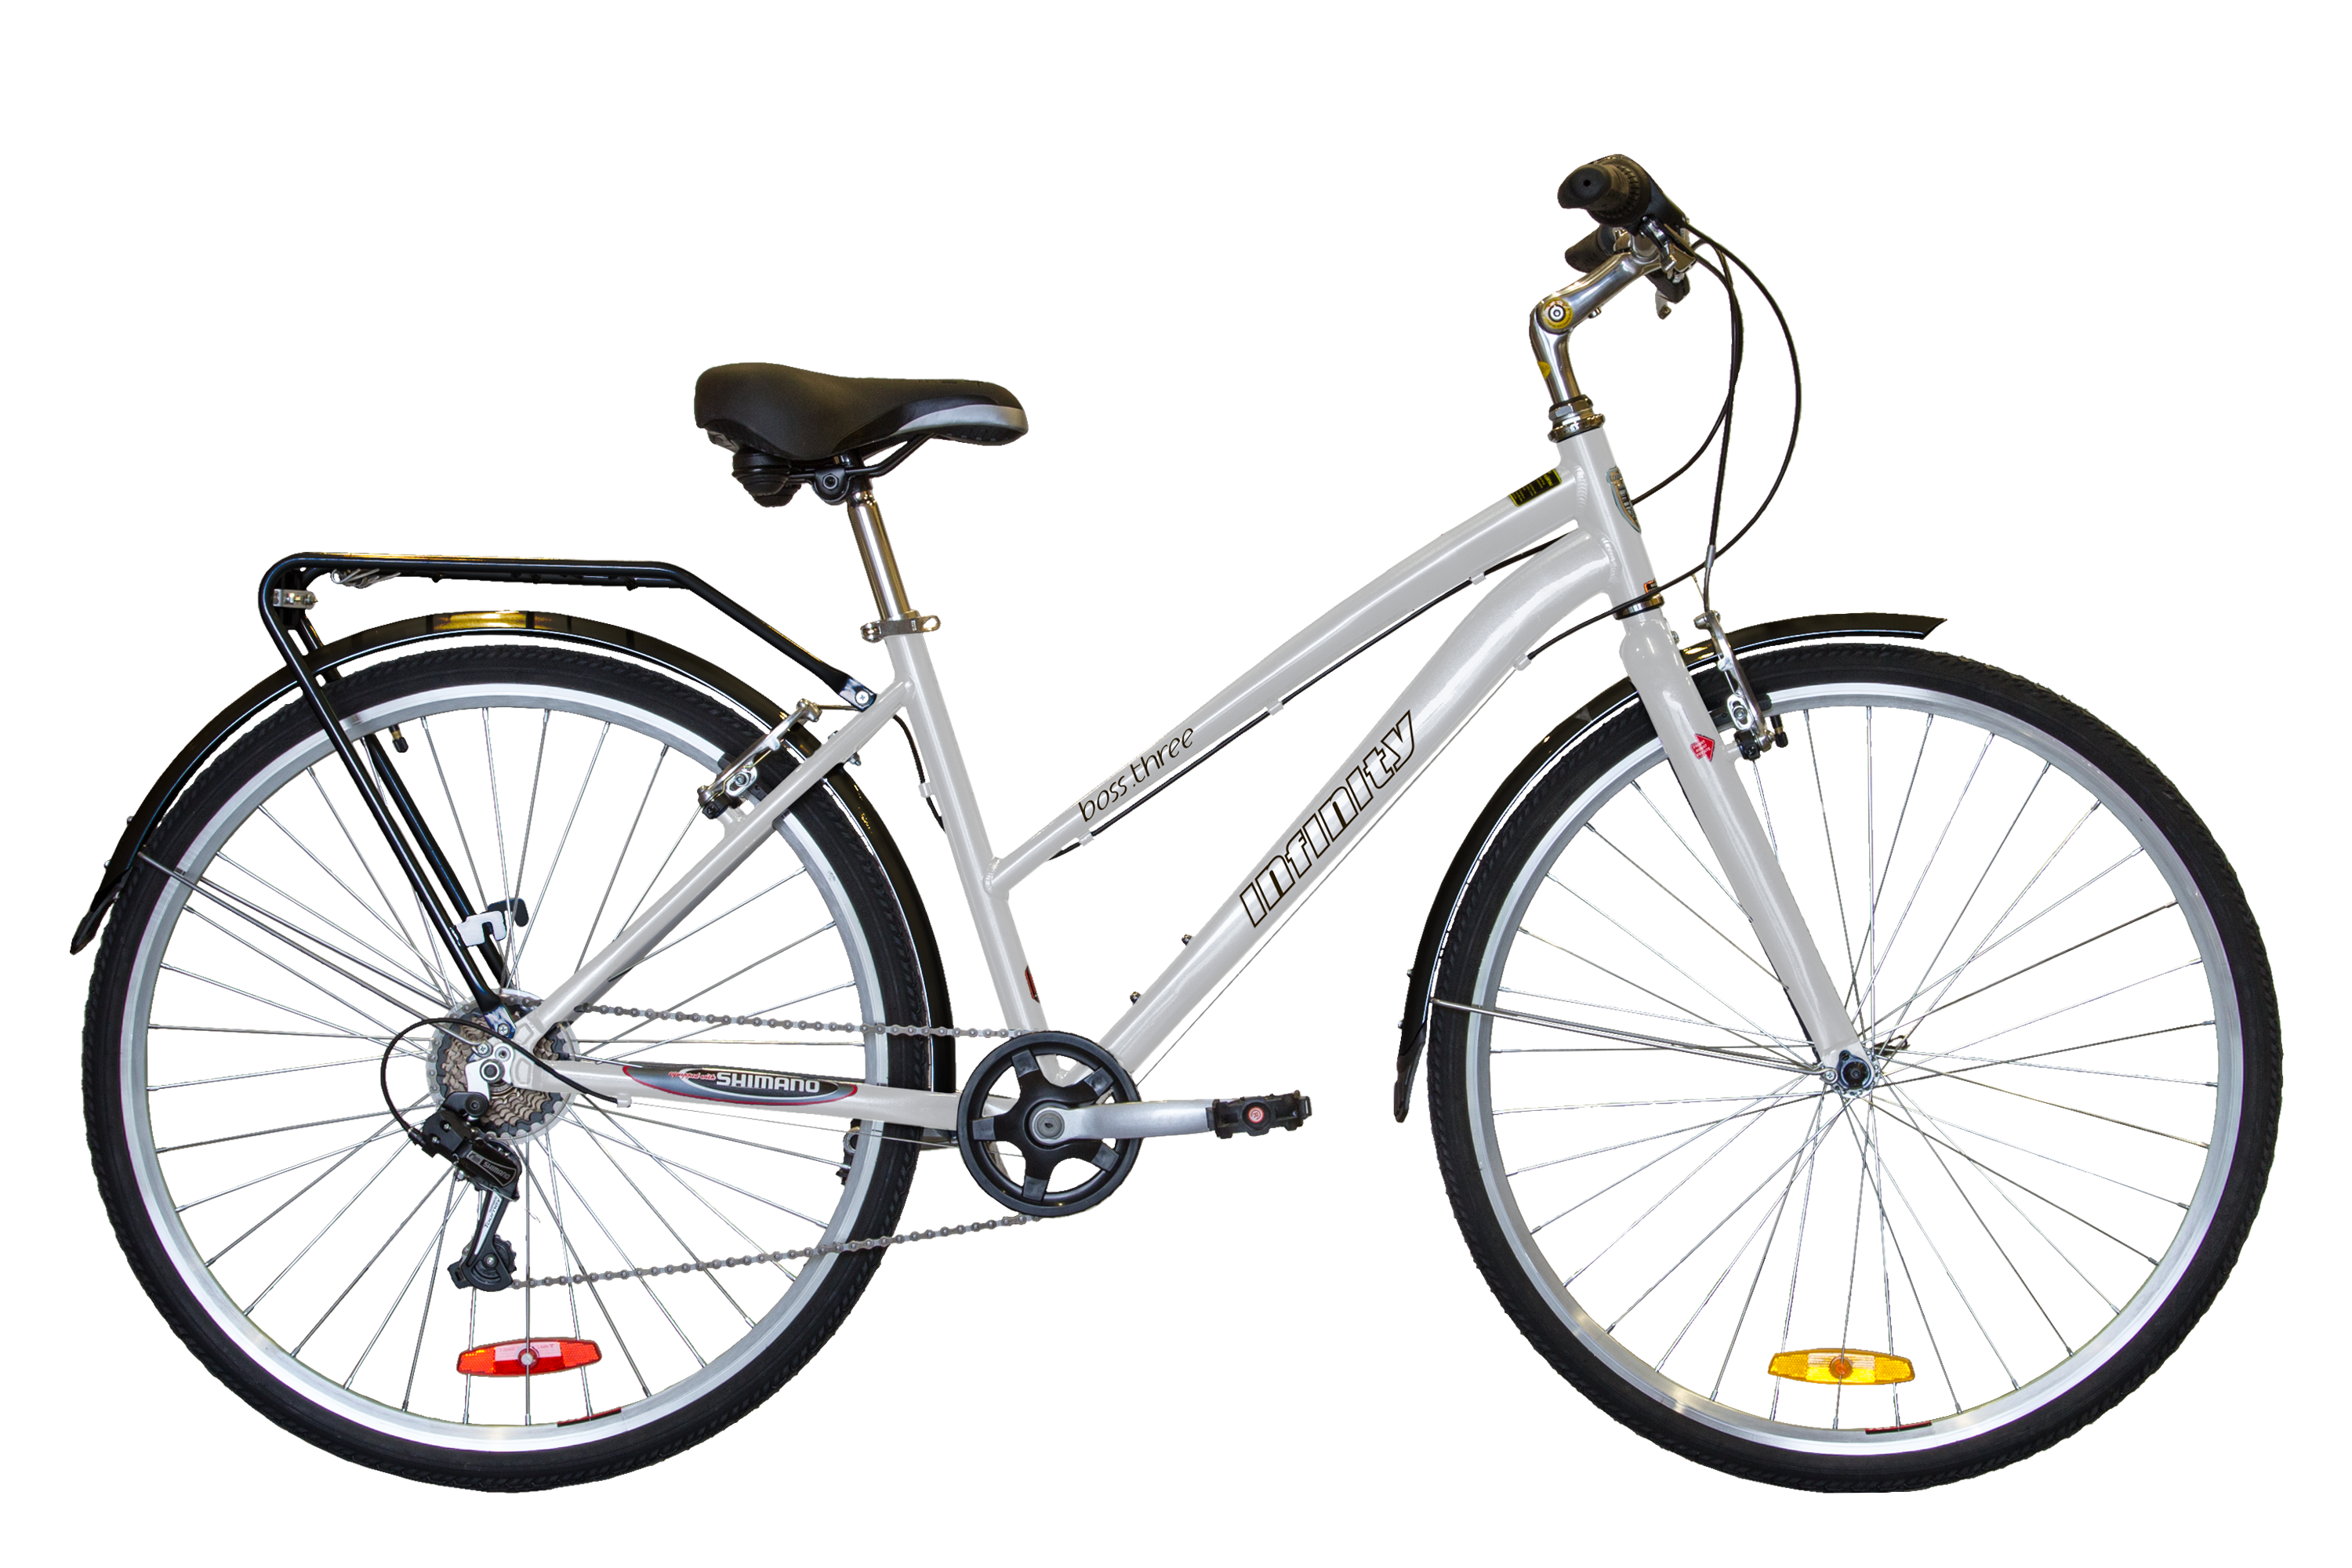 infinity hybrid bike costco